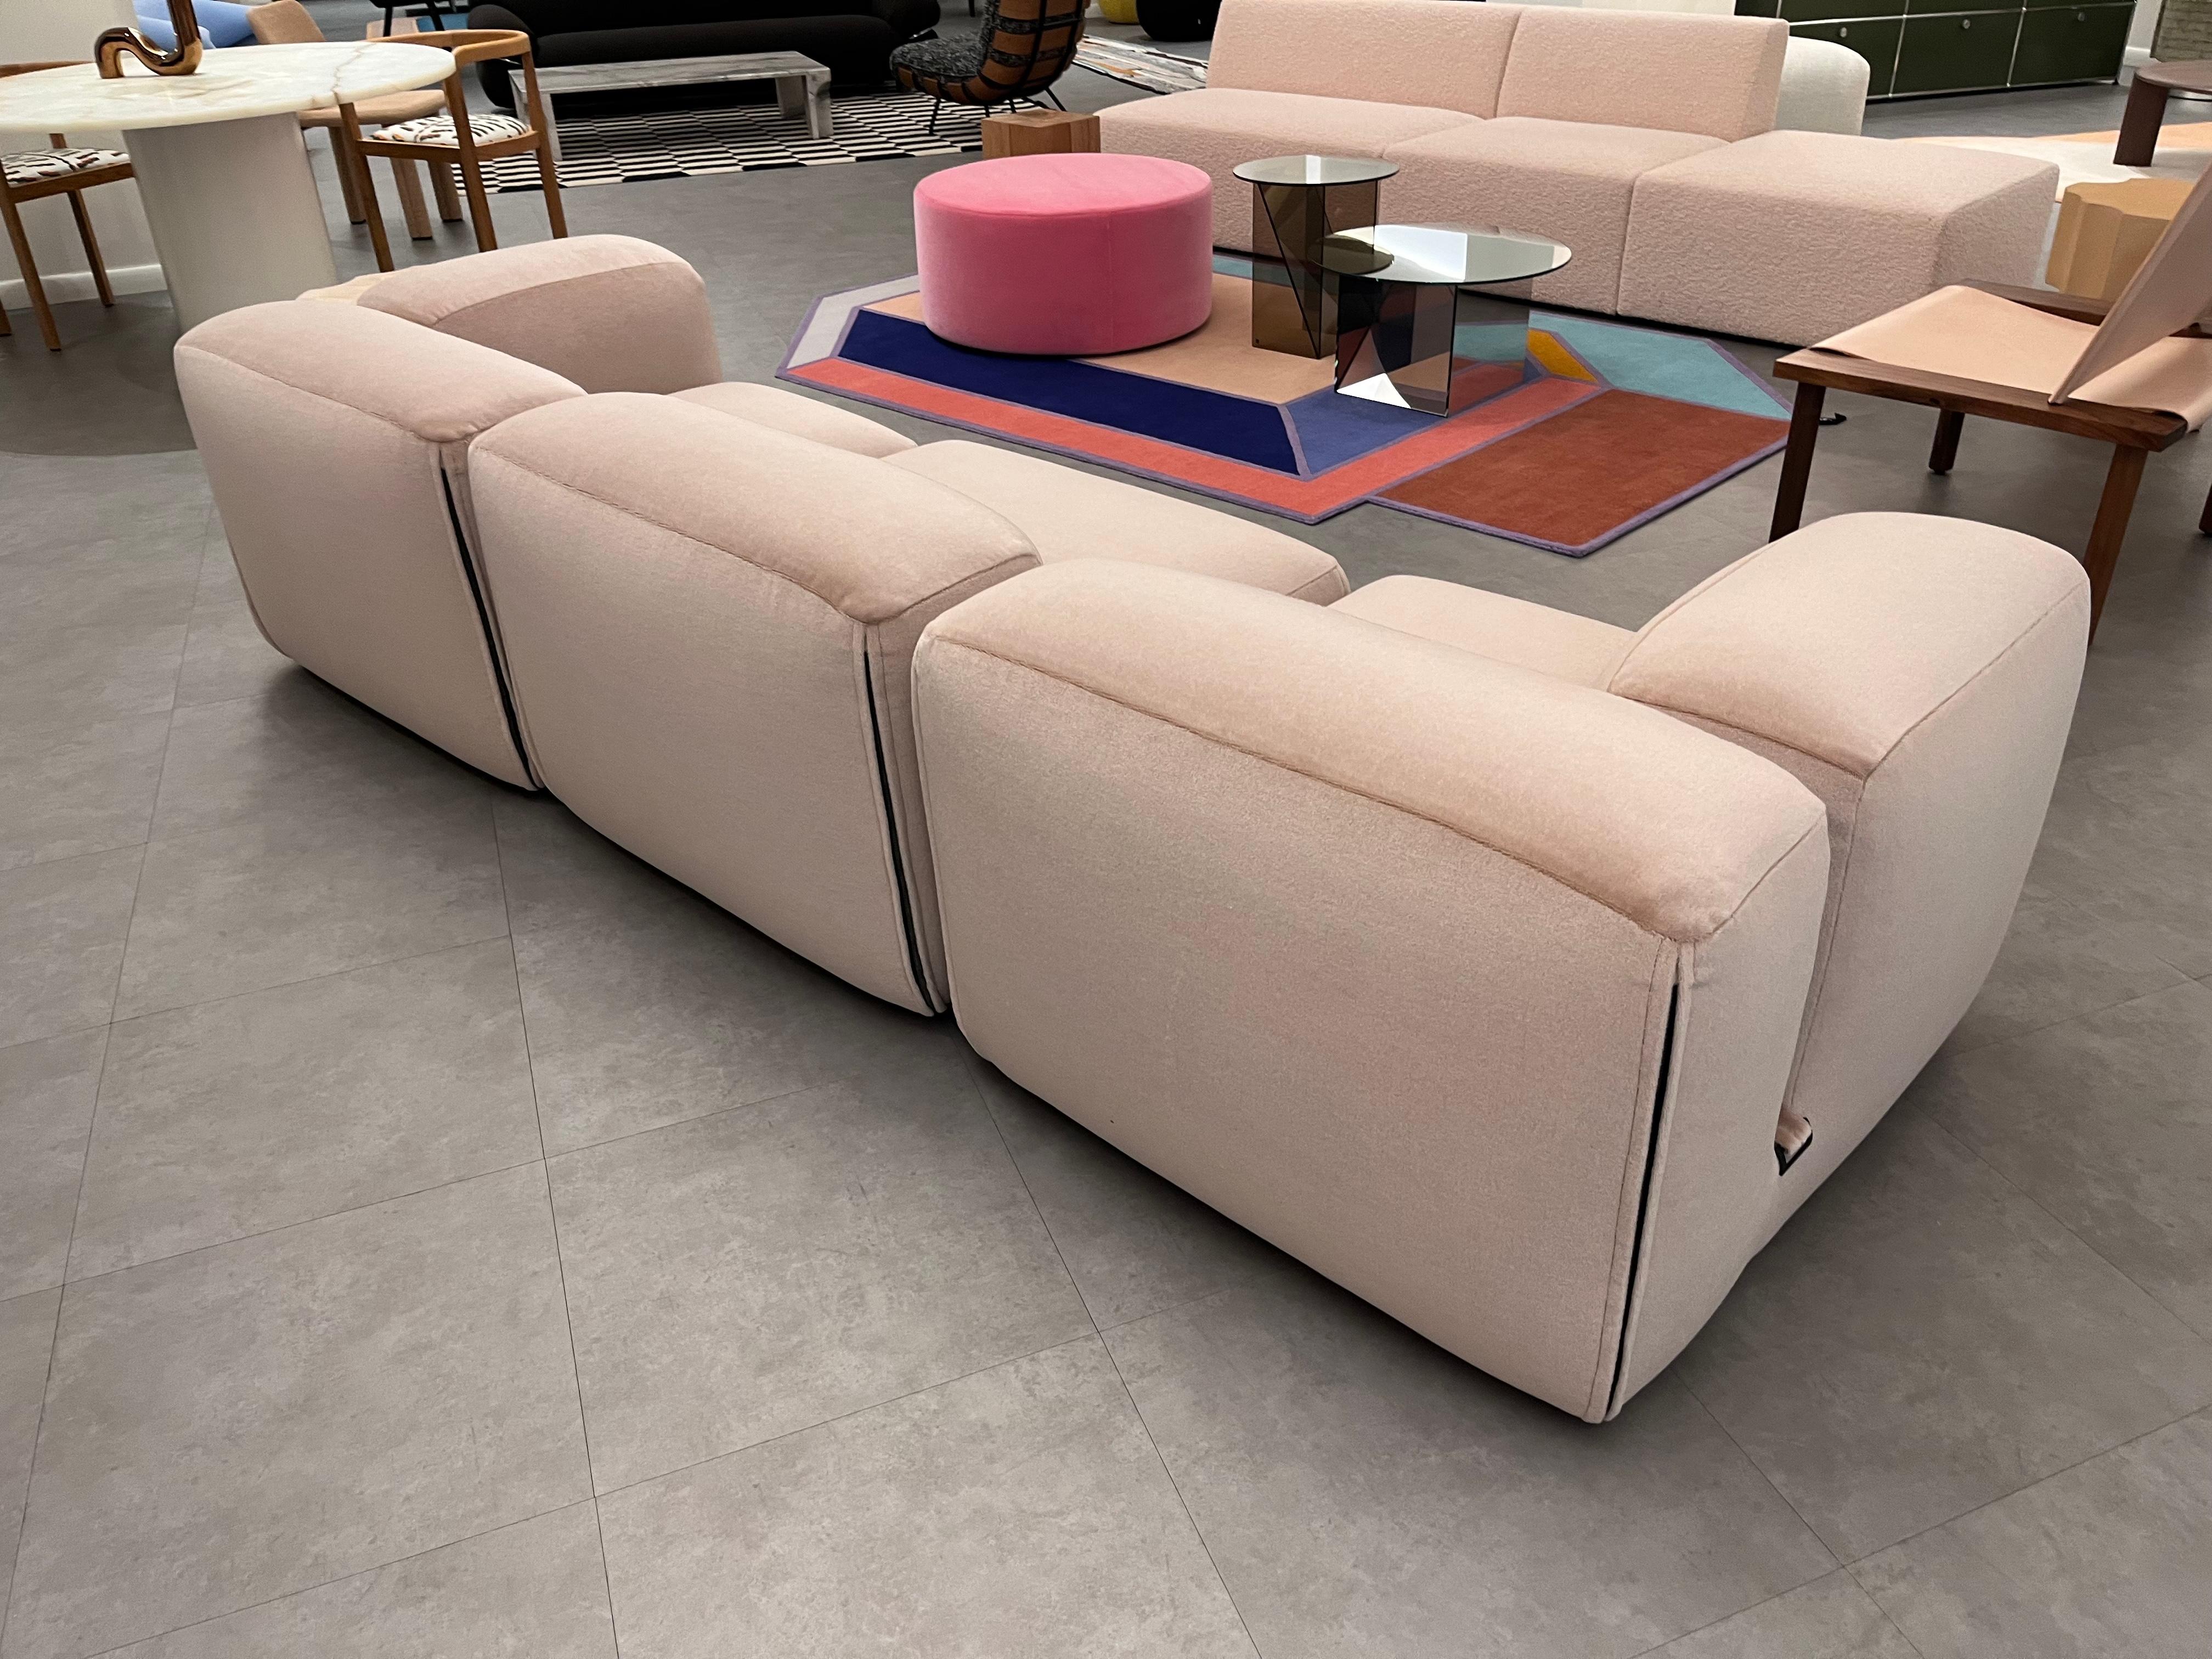  Tacchini Le Mura Modular Sofa by Mario Bellini in STOCK In Excellent Condition For Sale In New York, NY